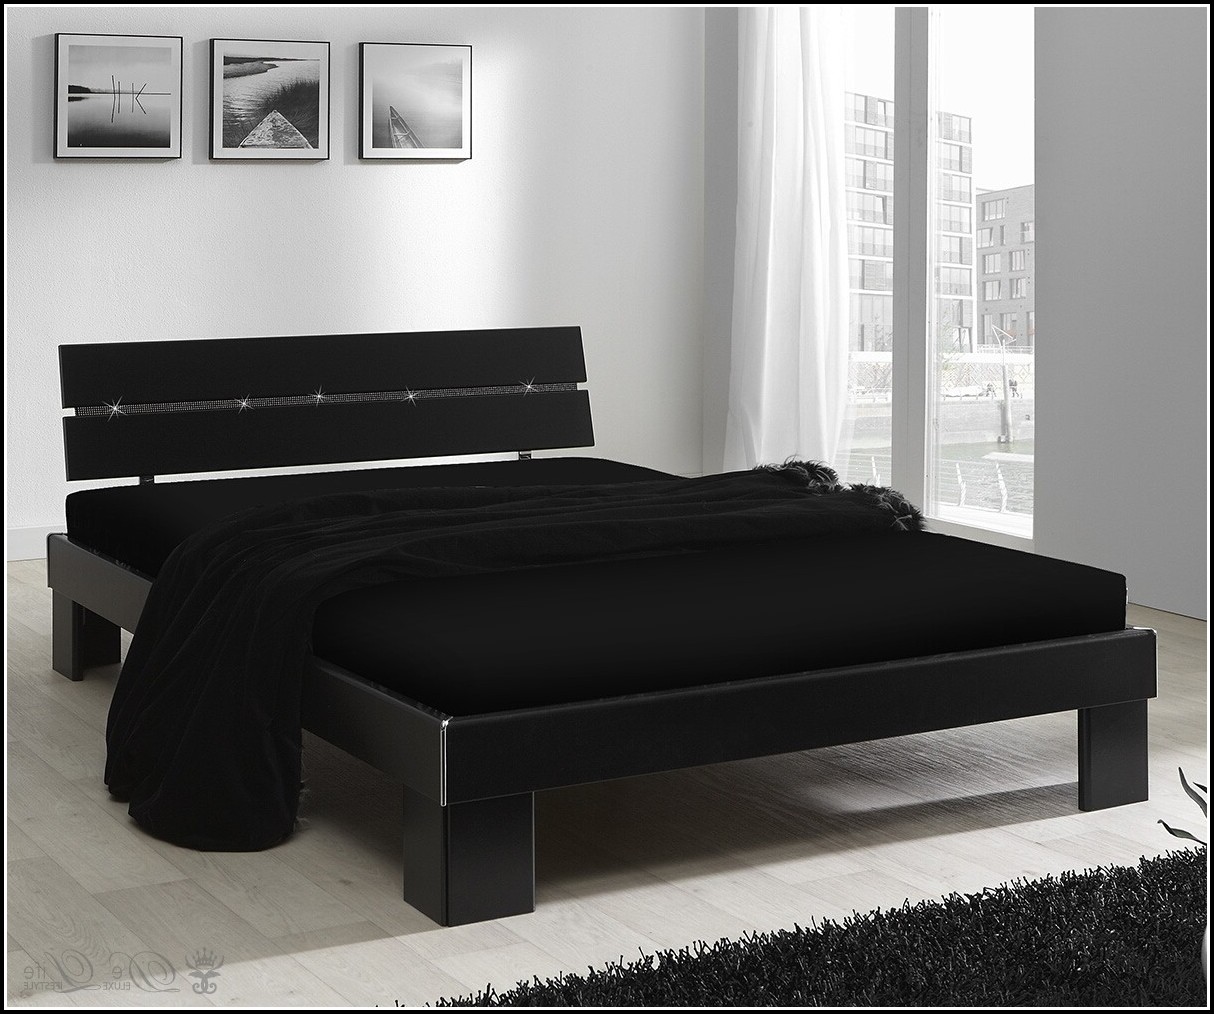 Ikea-bett-140x200-schwarz Download Page - beste Wohnideen ...